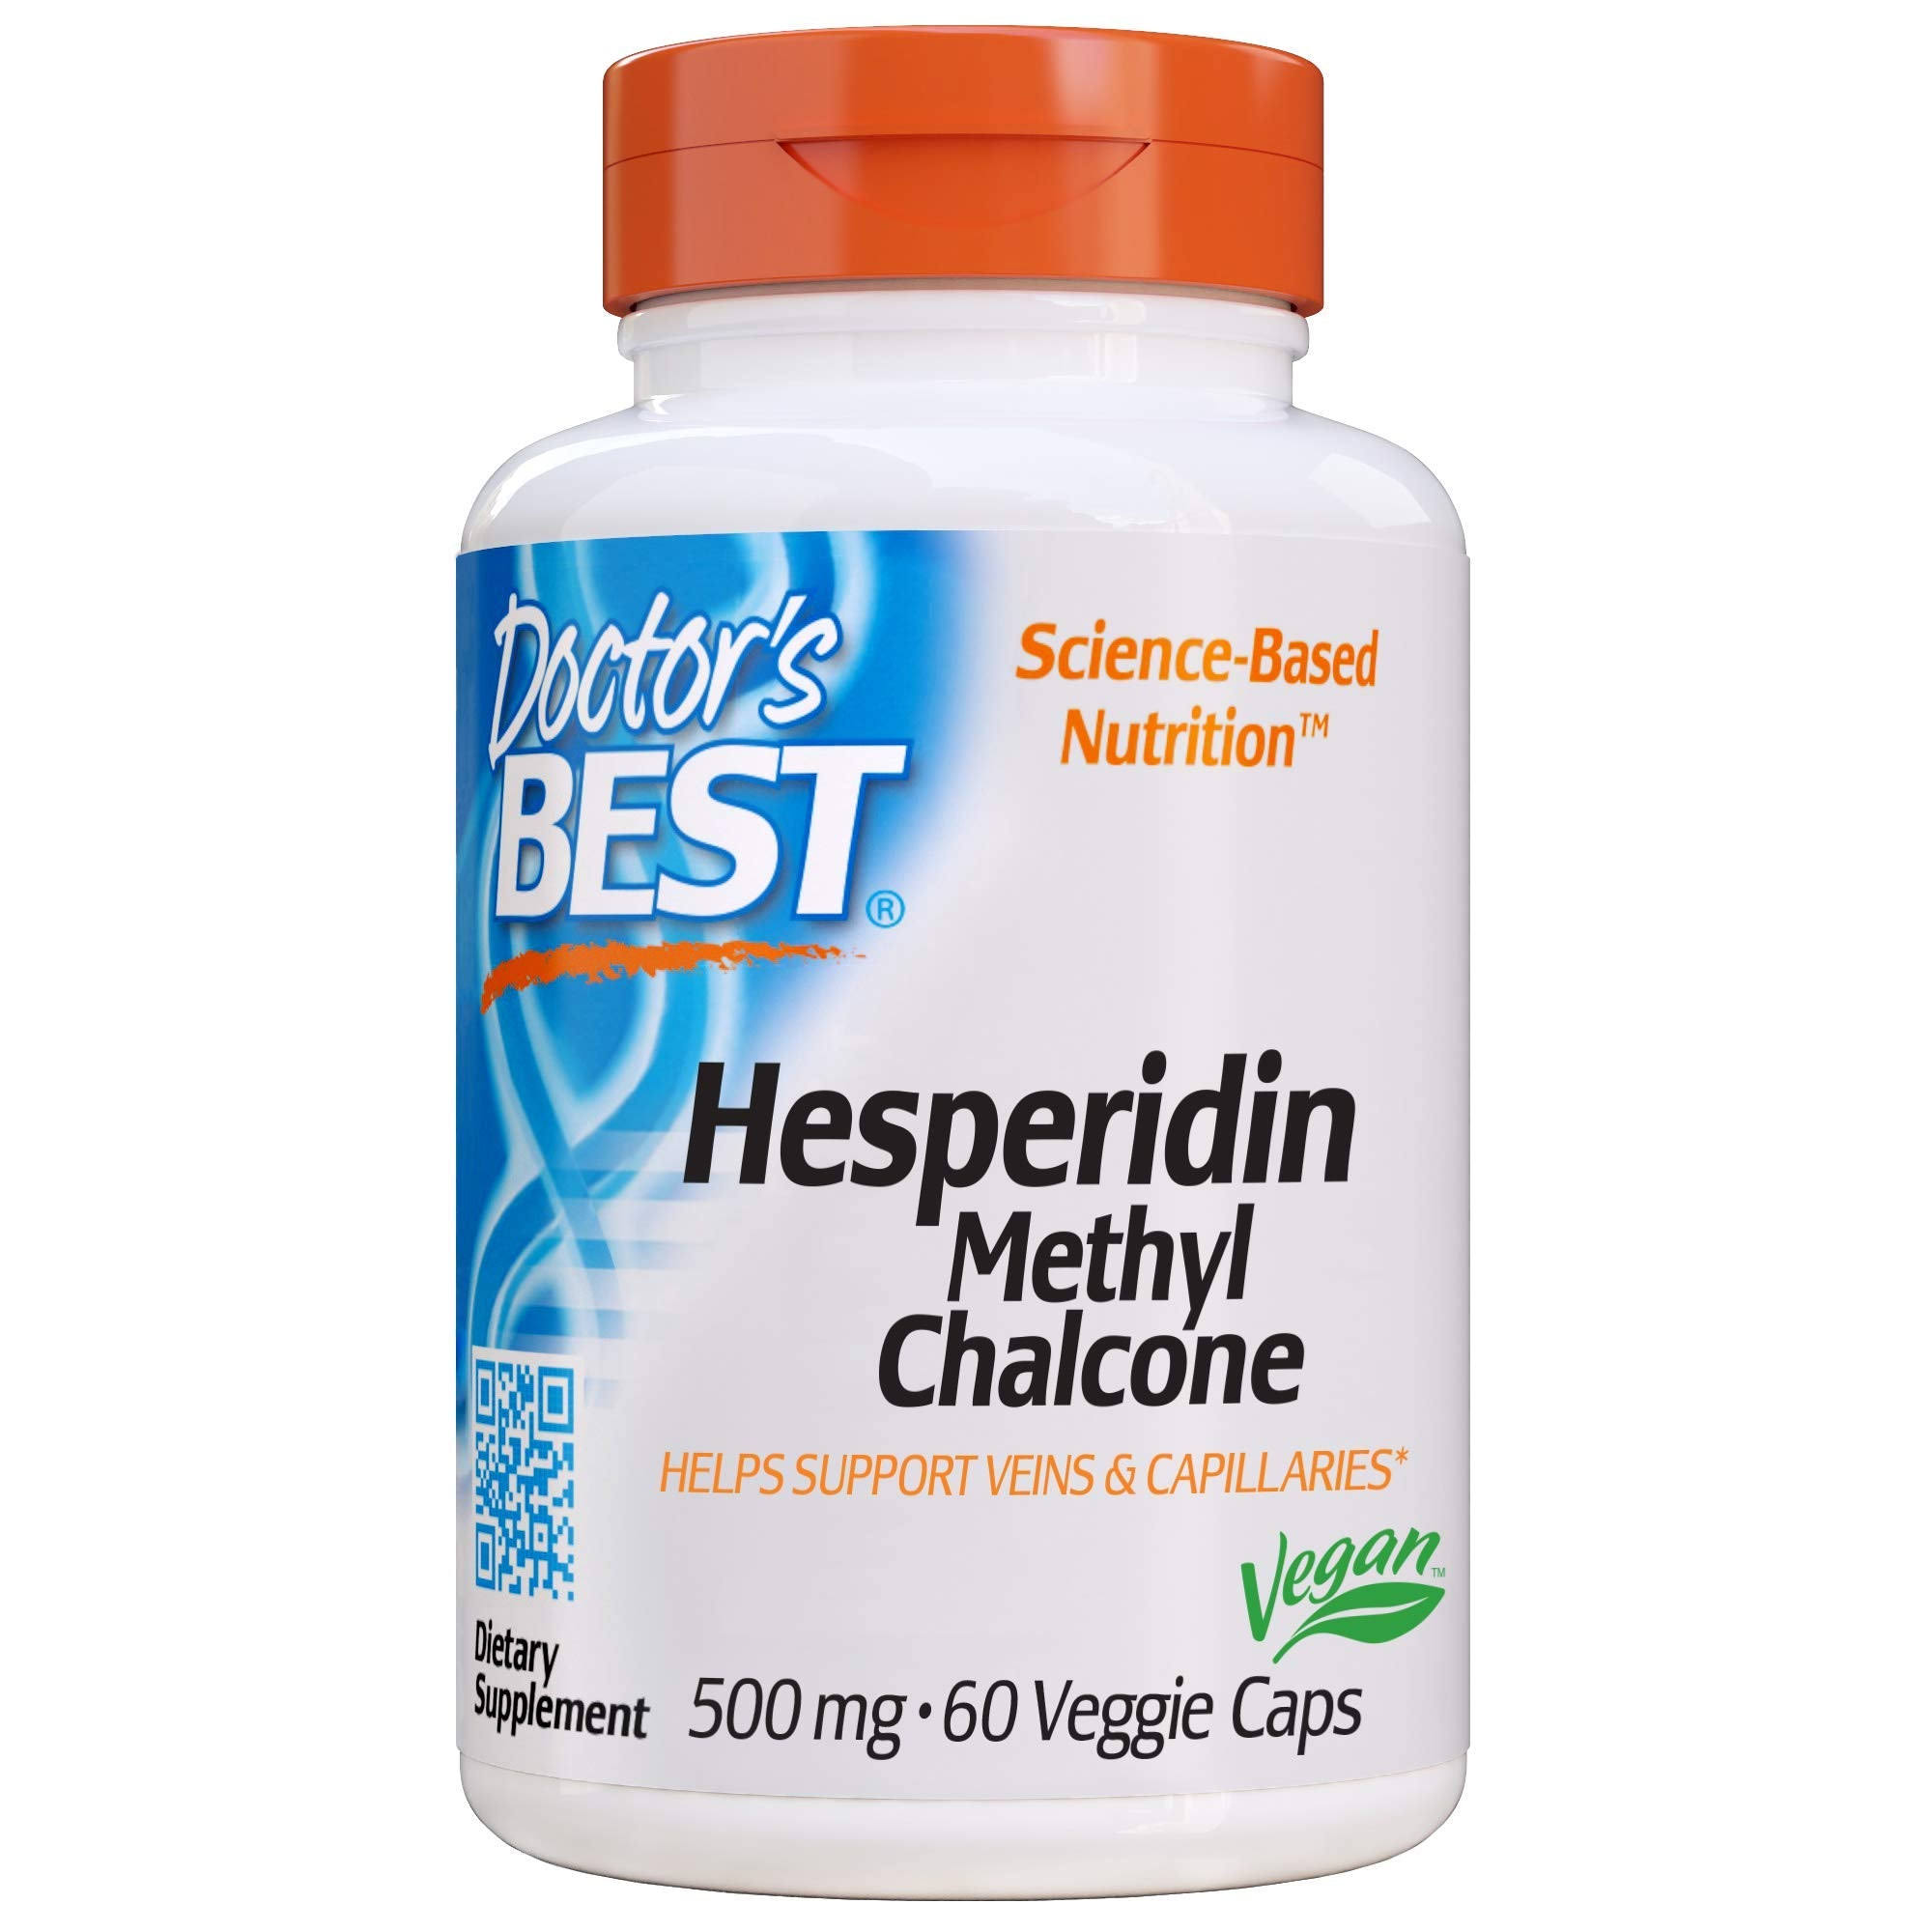 Doctor's Best Hesperidin Methyl Chalcone Supplement - 500mg, 60ct